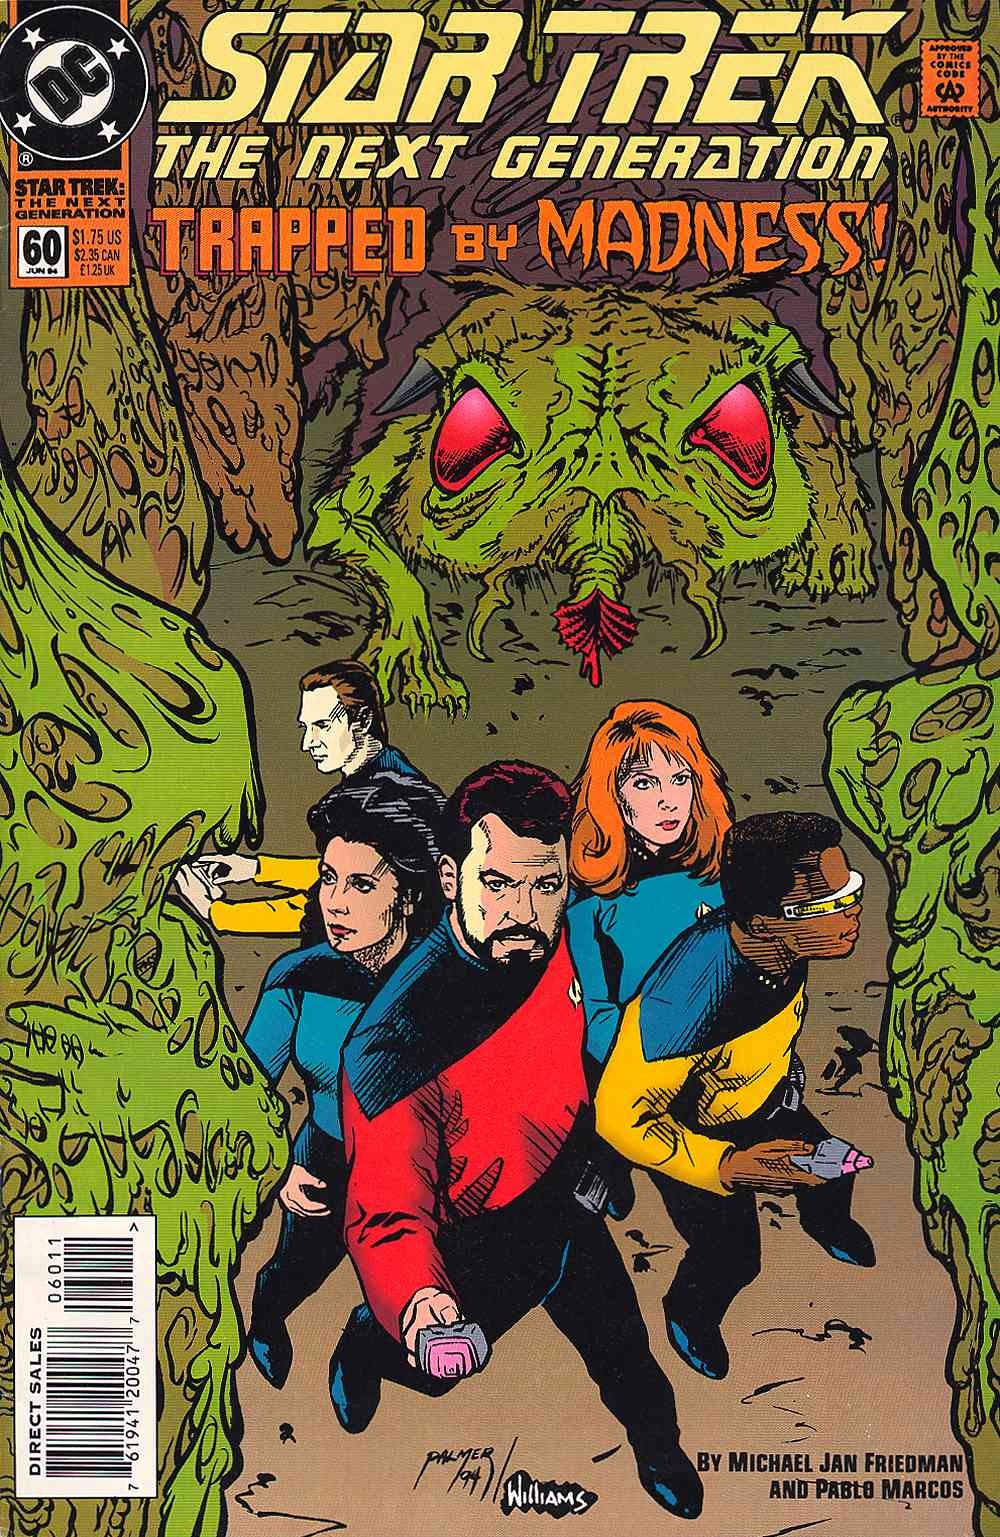 Star Trek: The Next Generation (1989) issue 60 - Page 1